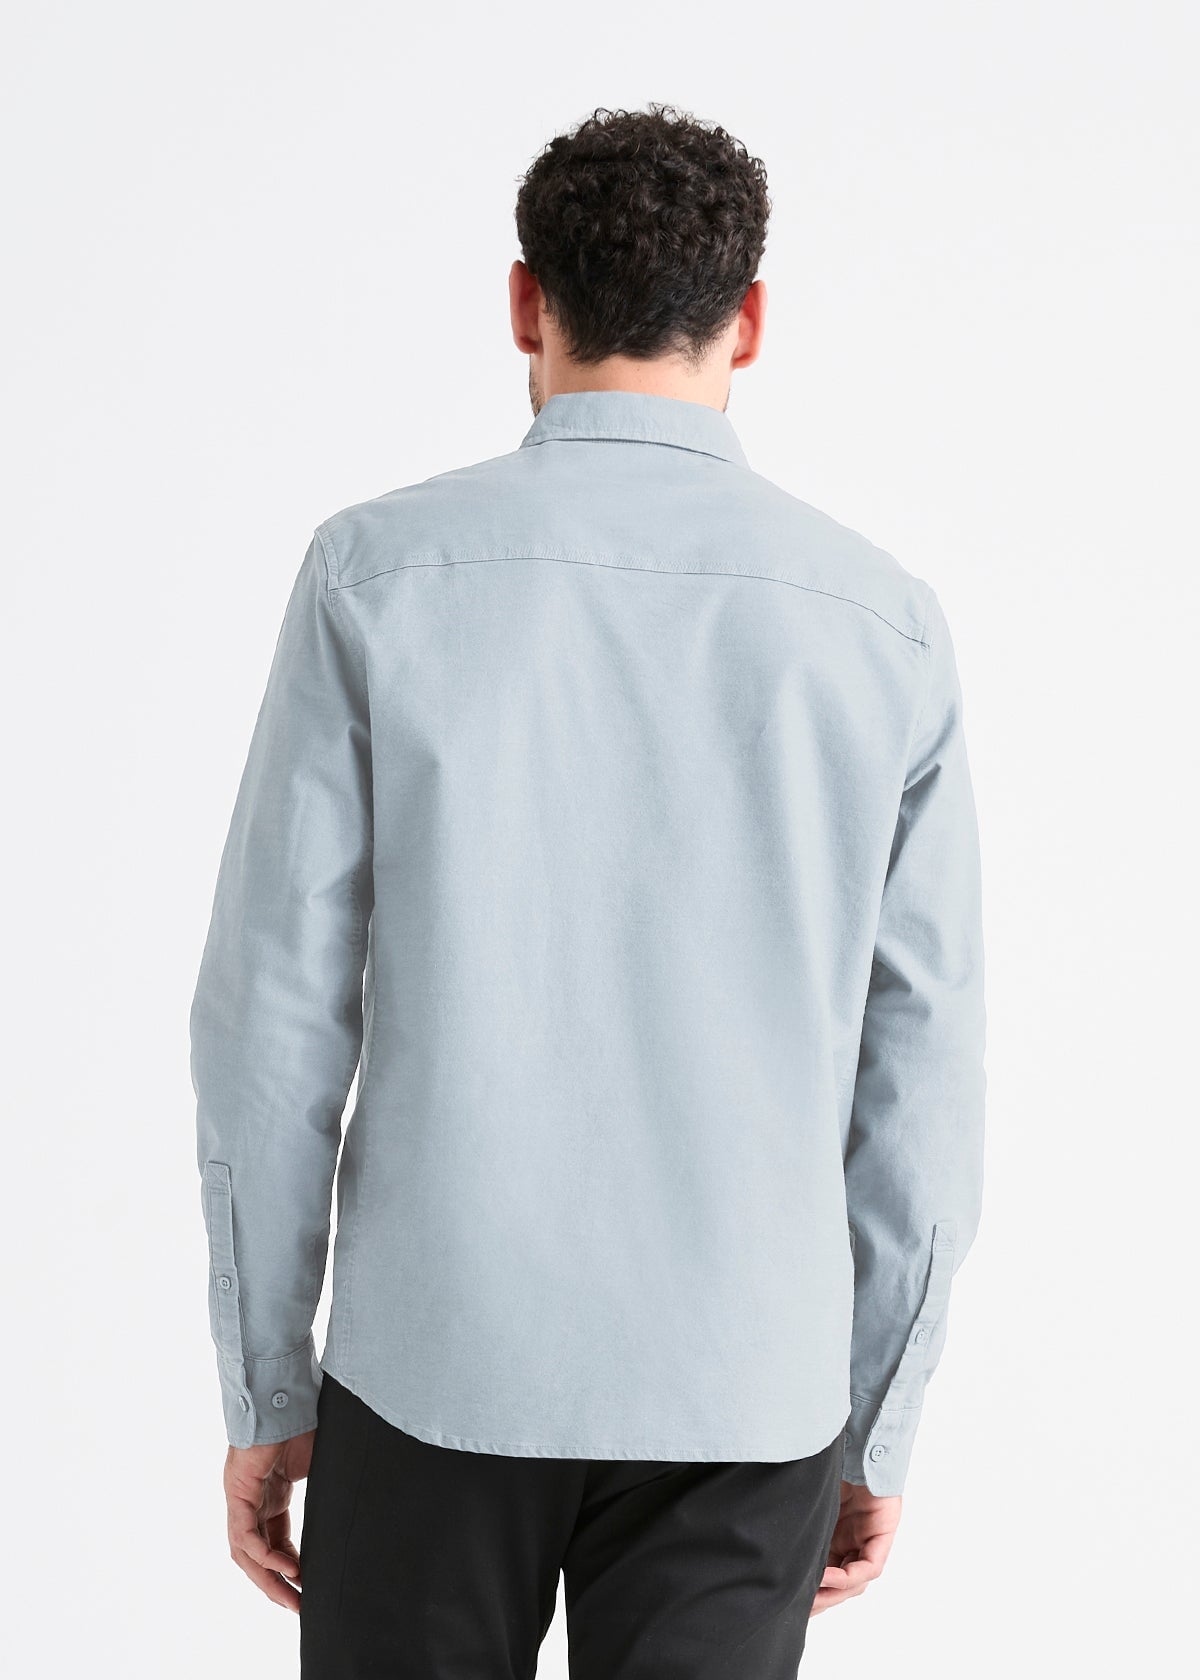 mens light blue stretch button down shirt back